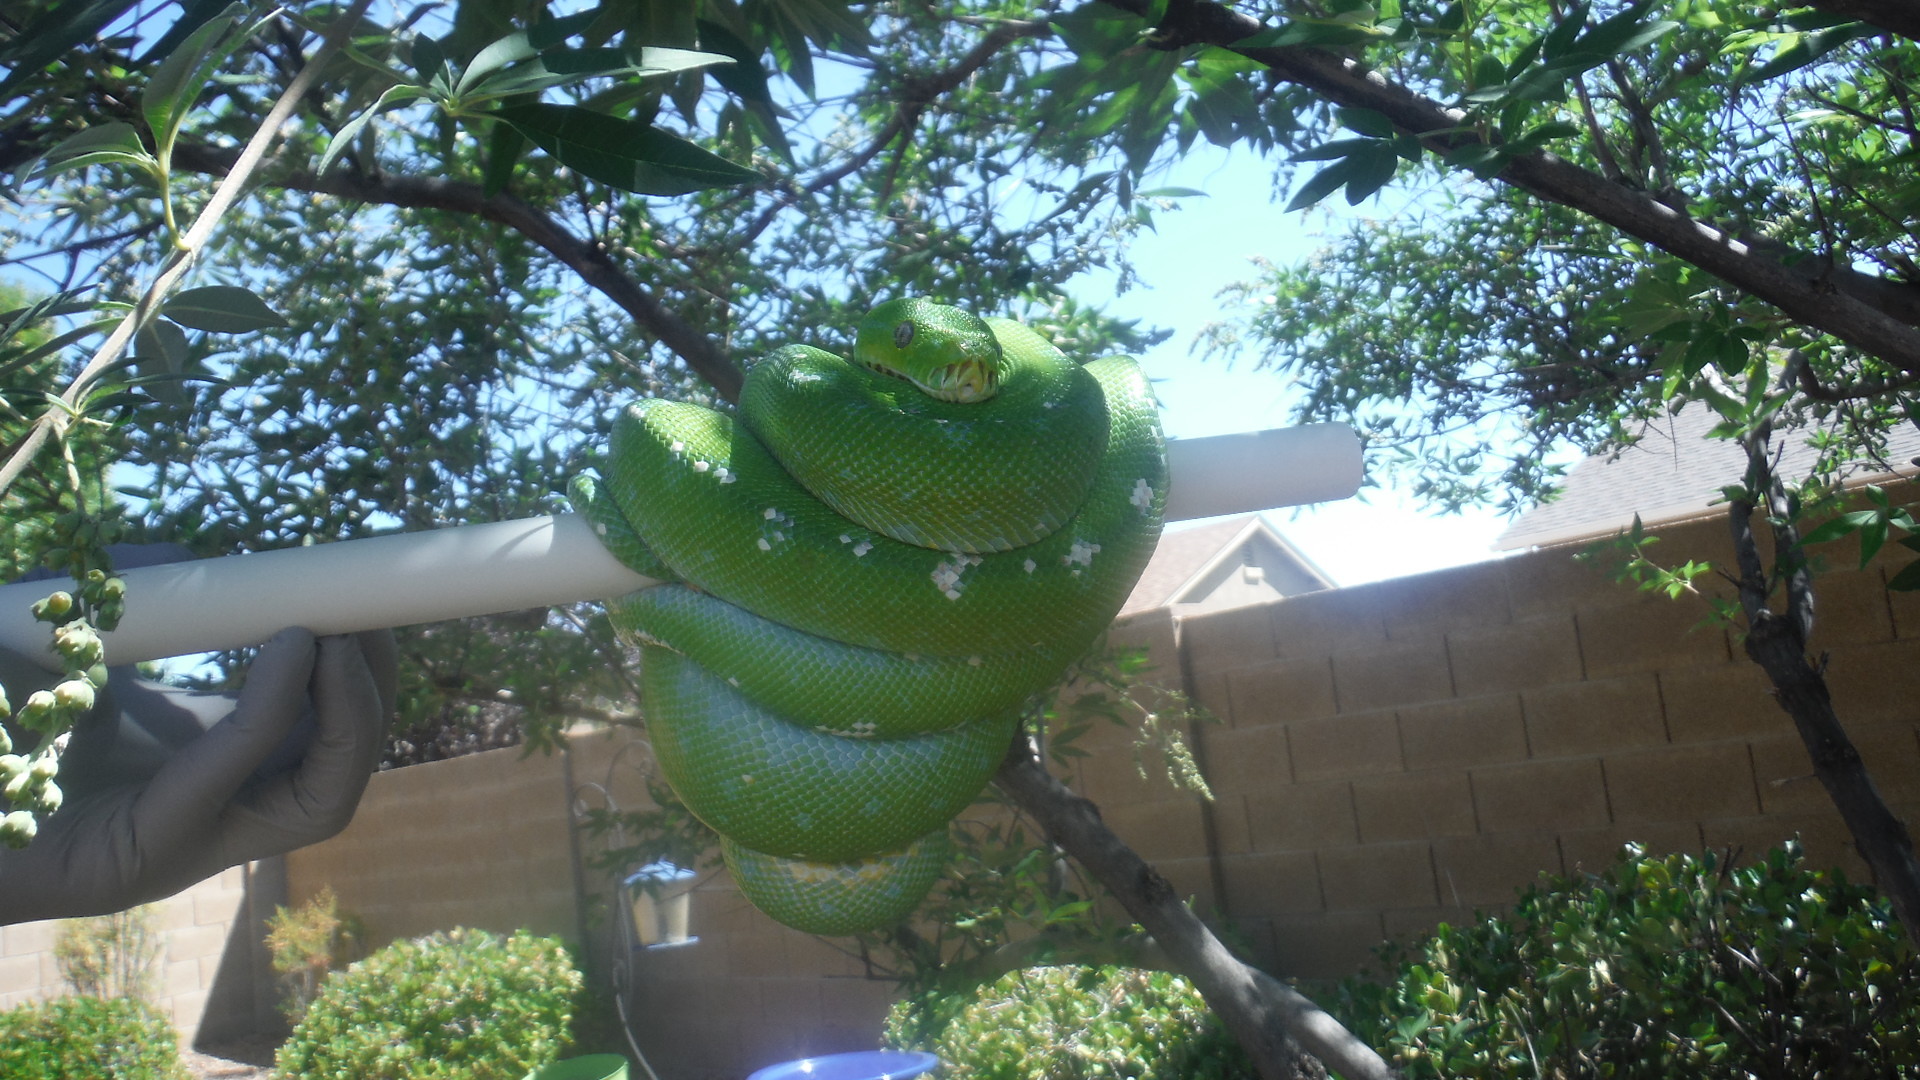 Aru Green Tree Python by Colubrid Dreams